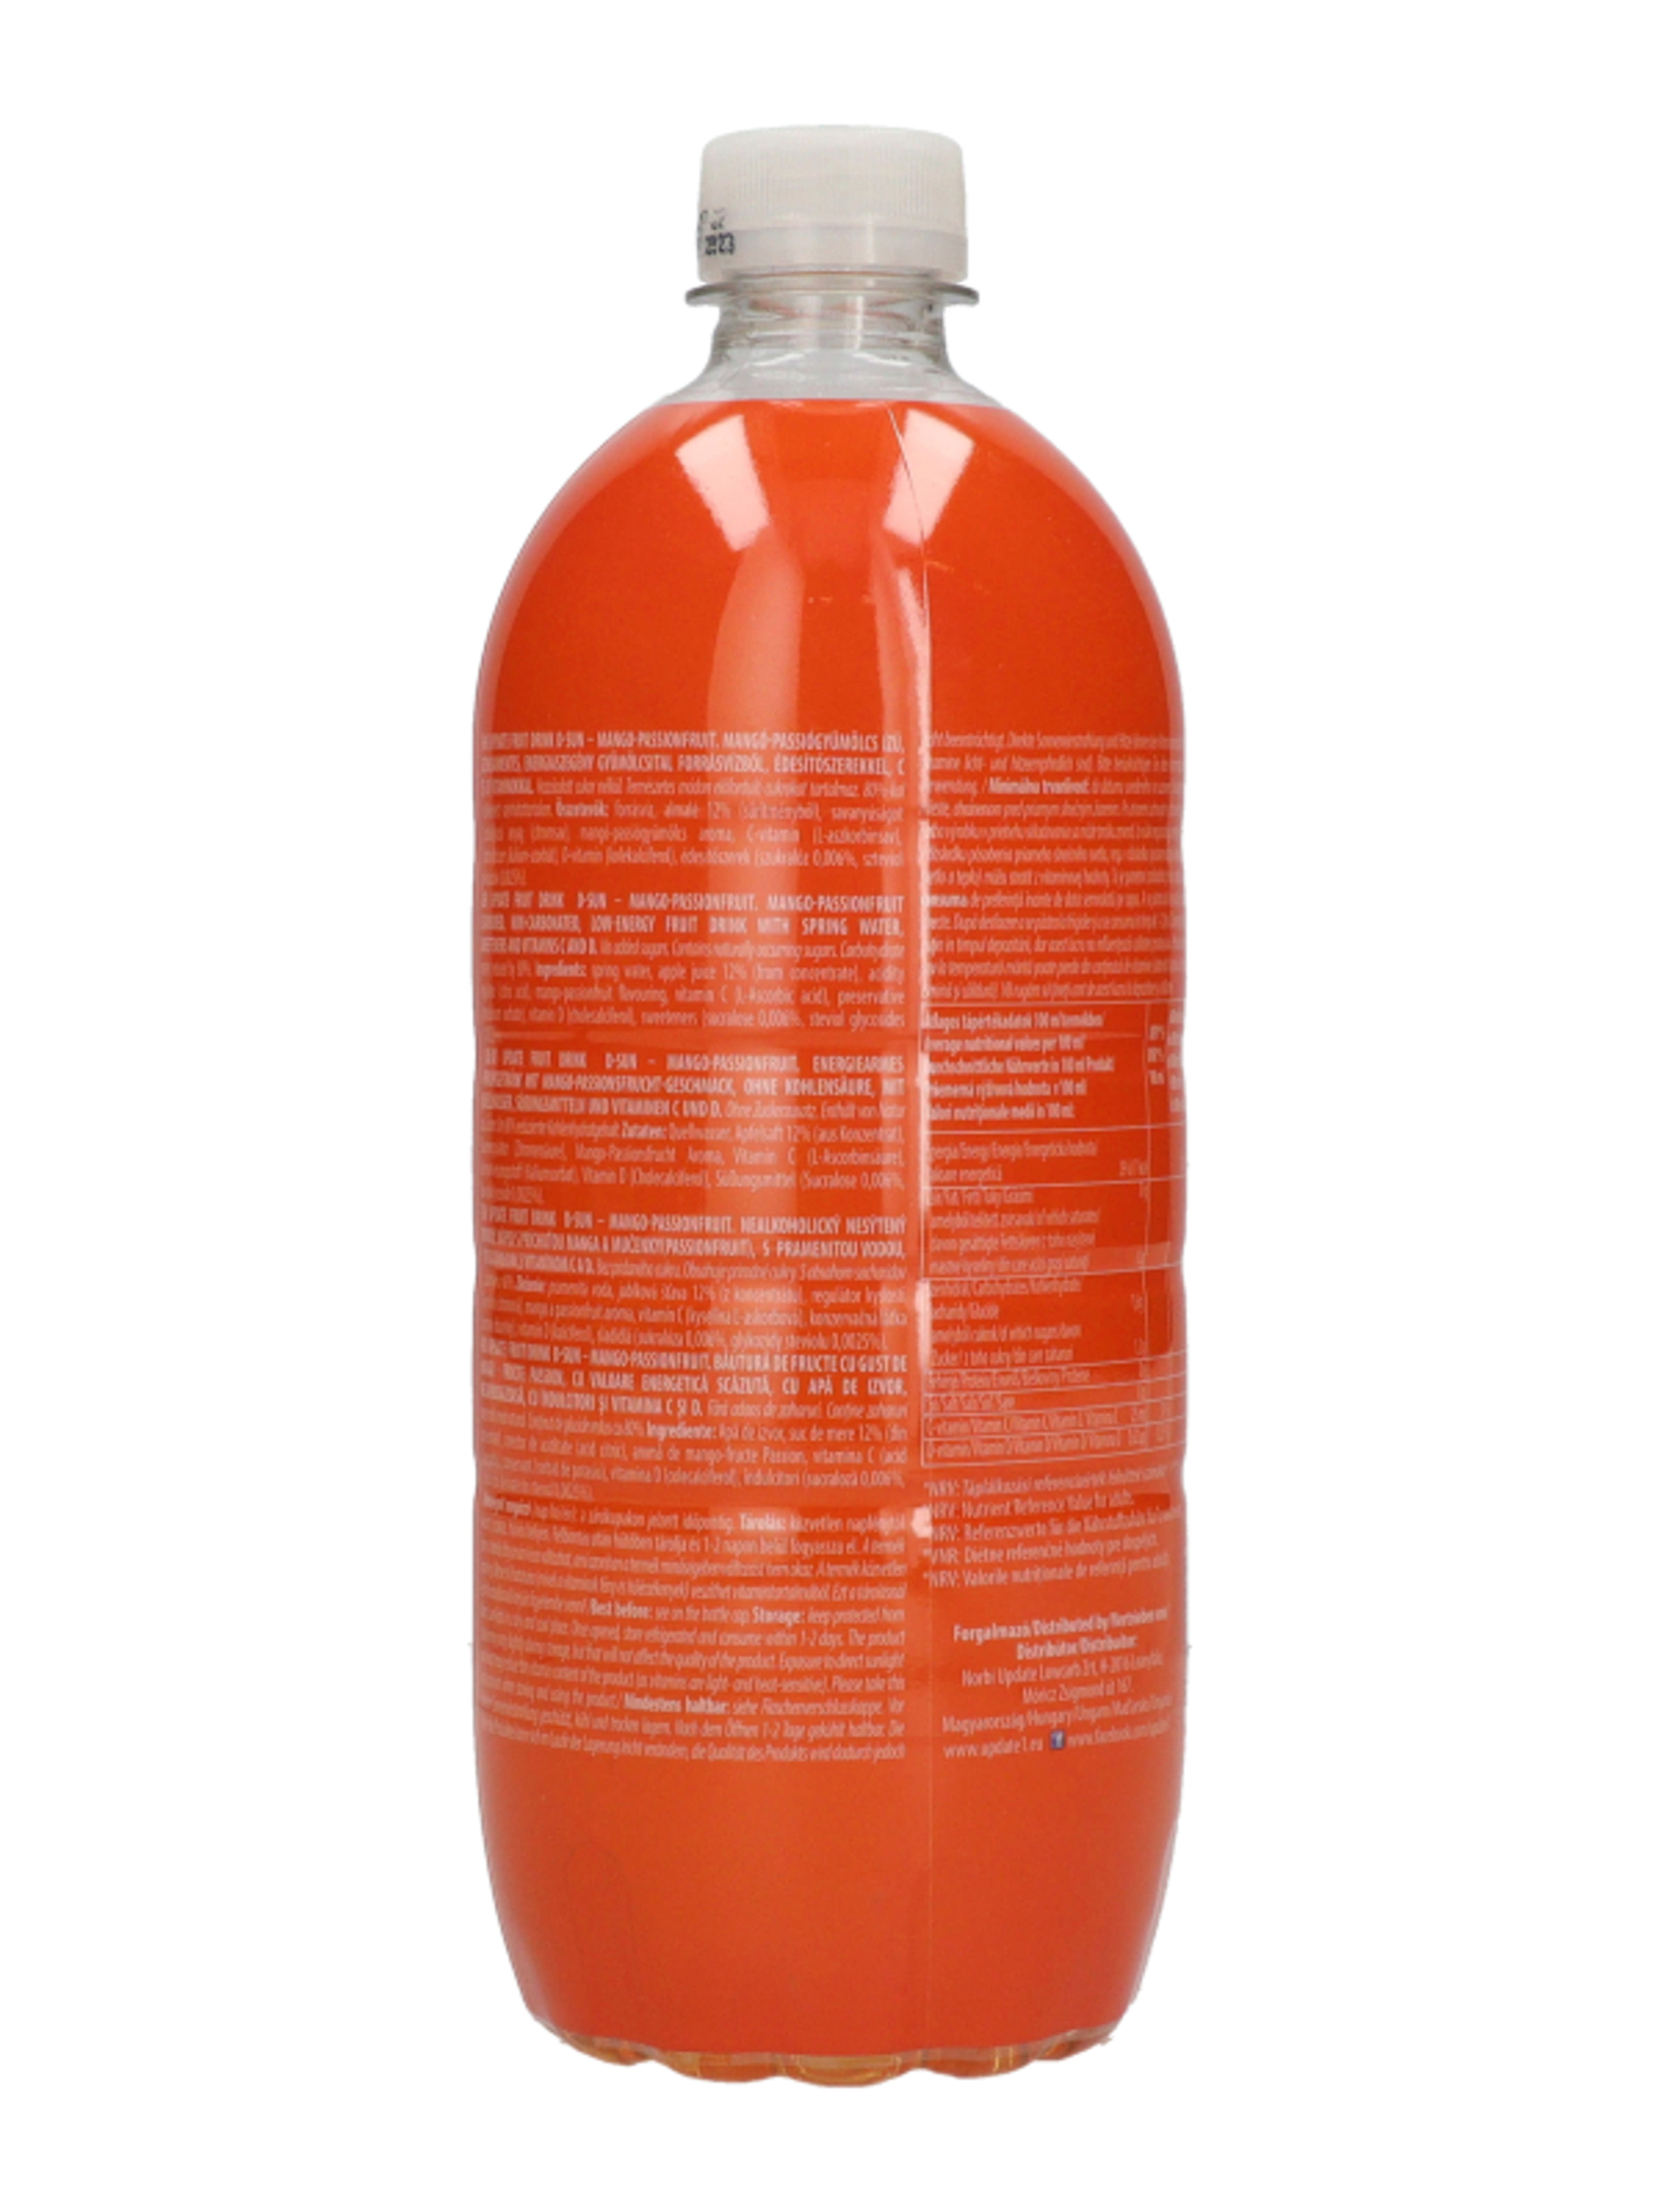 Update D sun mango-passiogy ízű üdítő - 800 ml-3